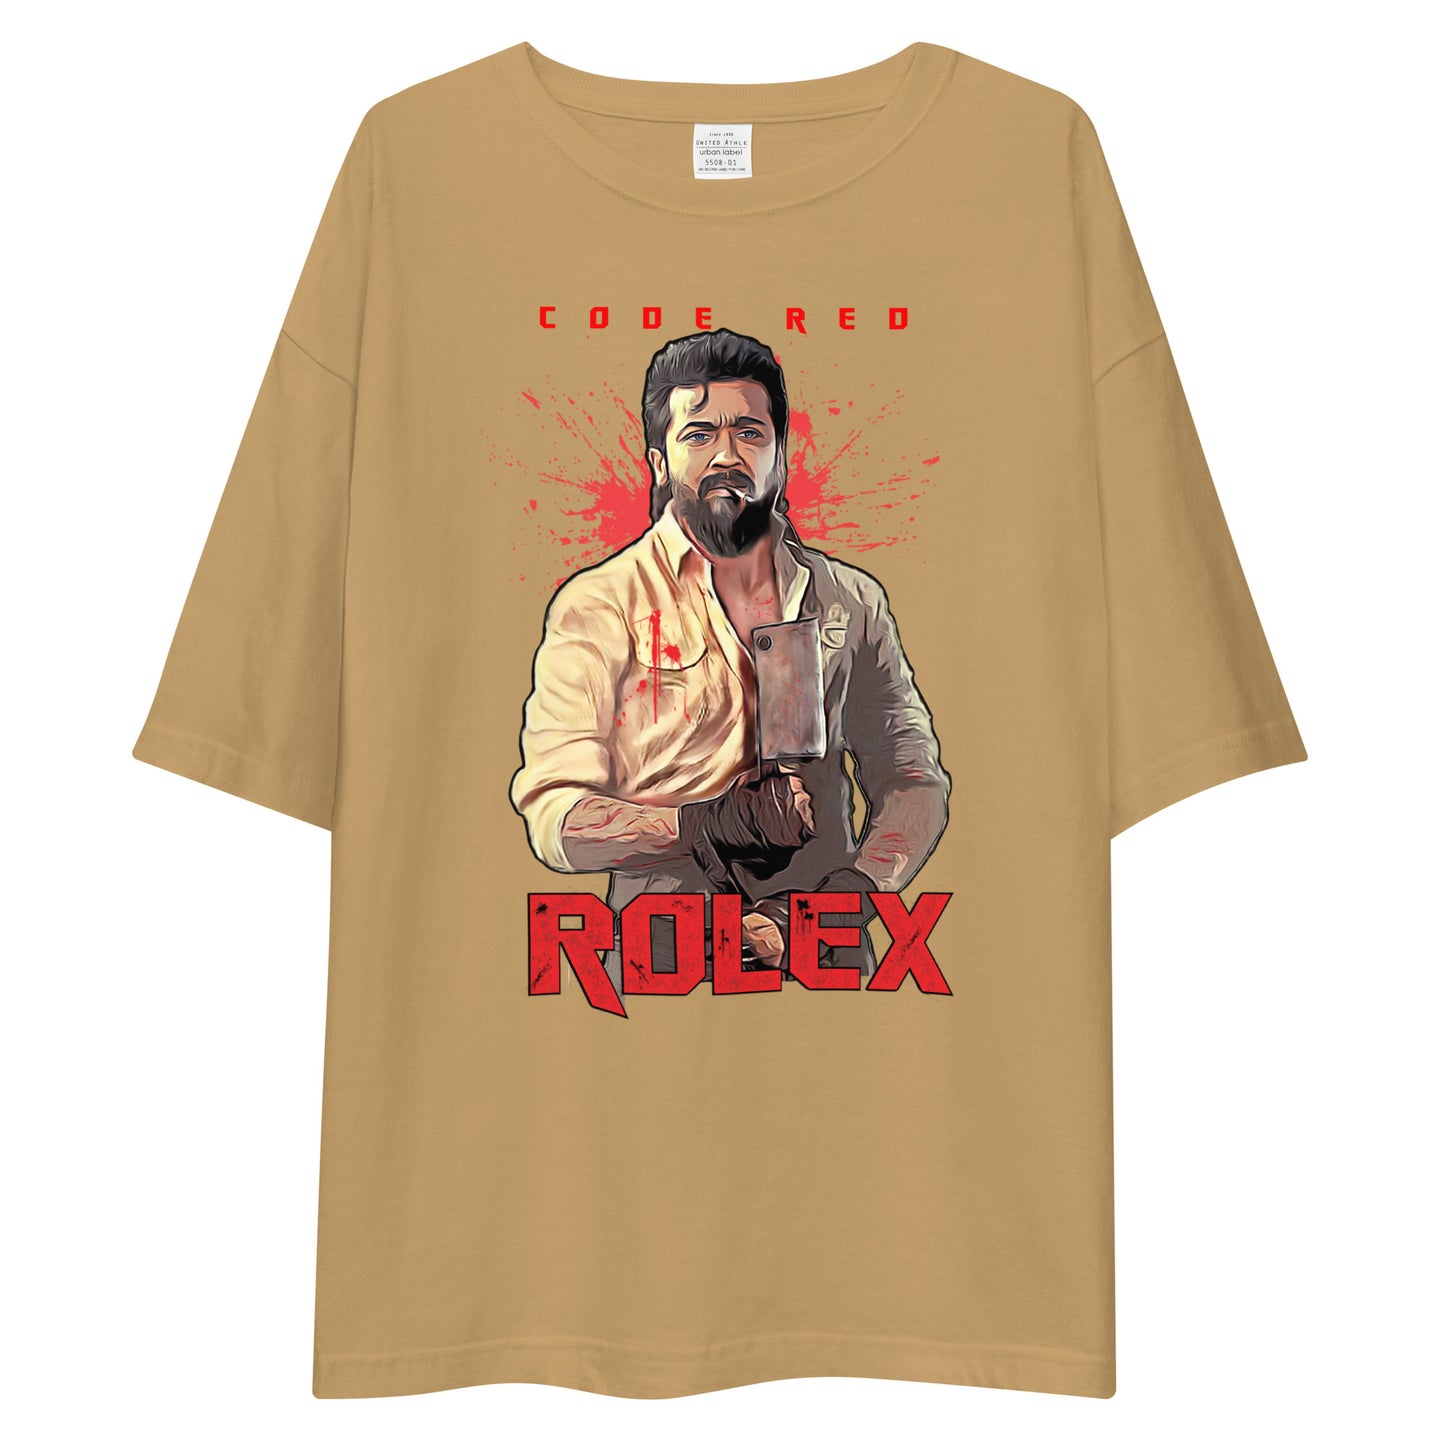 Unisex oversized t-shirt "Ro Lex"